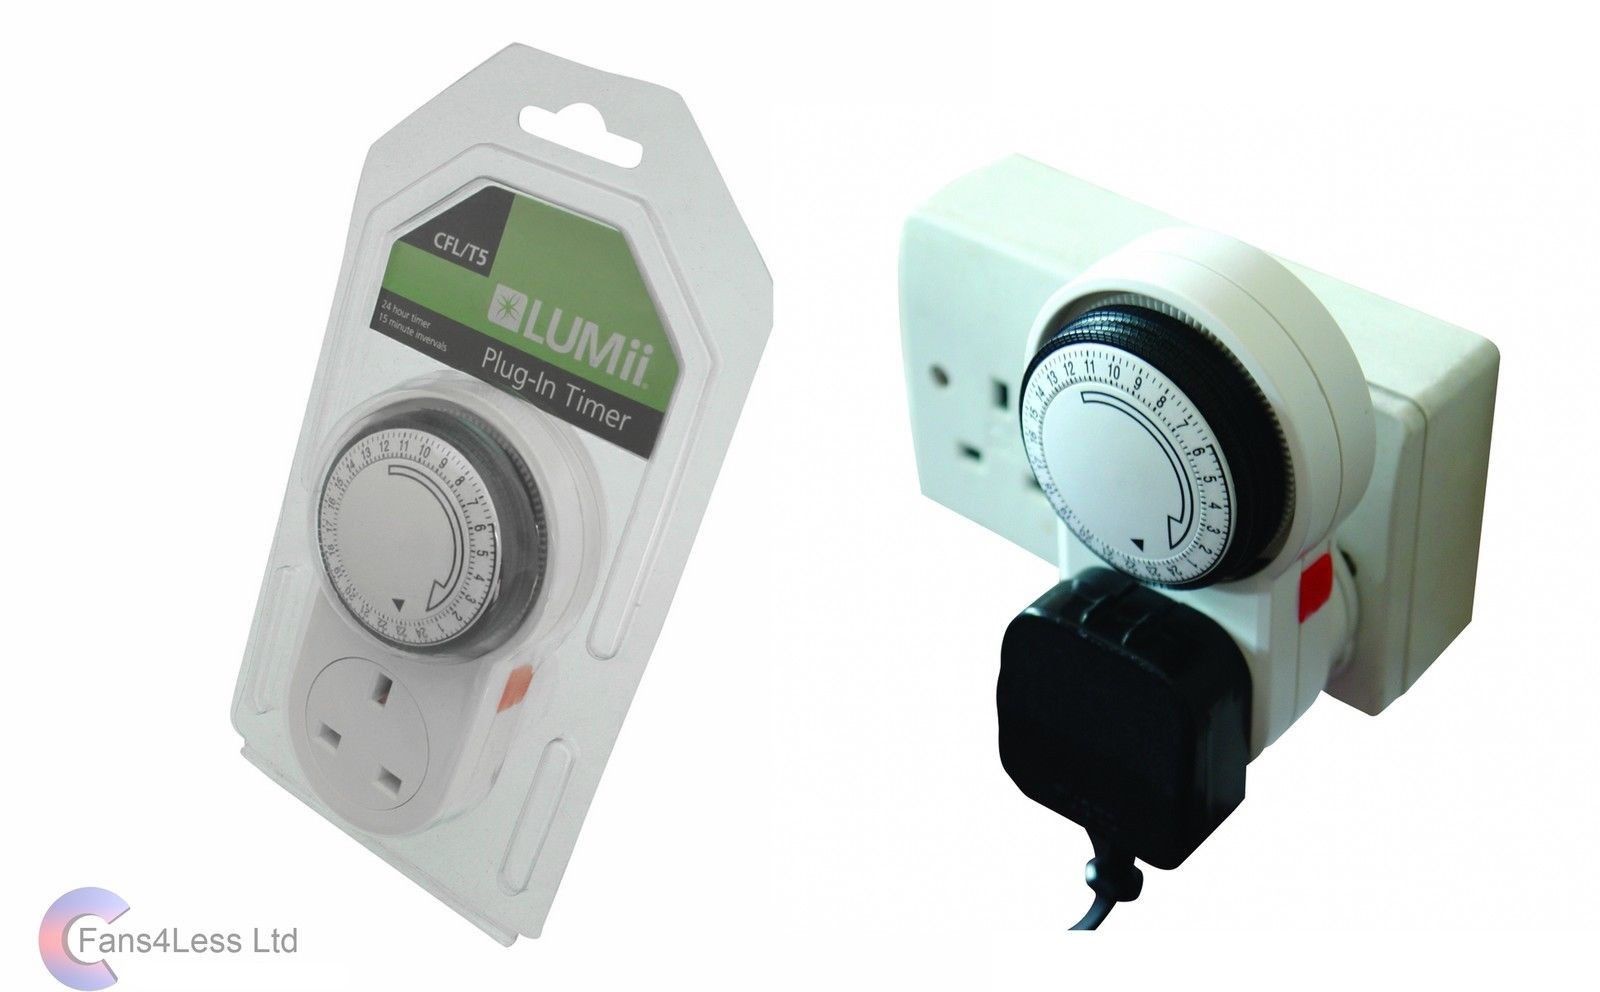 LUMii 24 Hour Plug in Manual Timer Grow Lights Ballasts HPS MH Light Kits & Fans